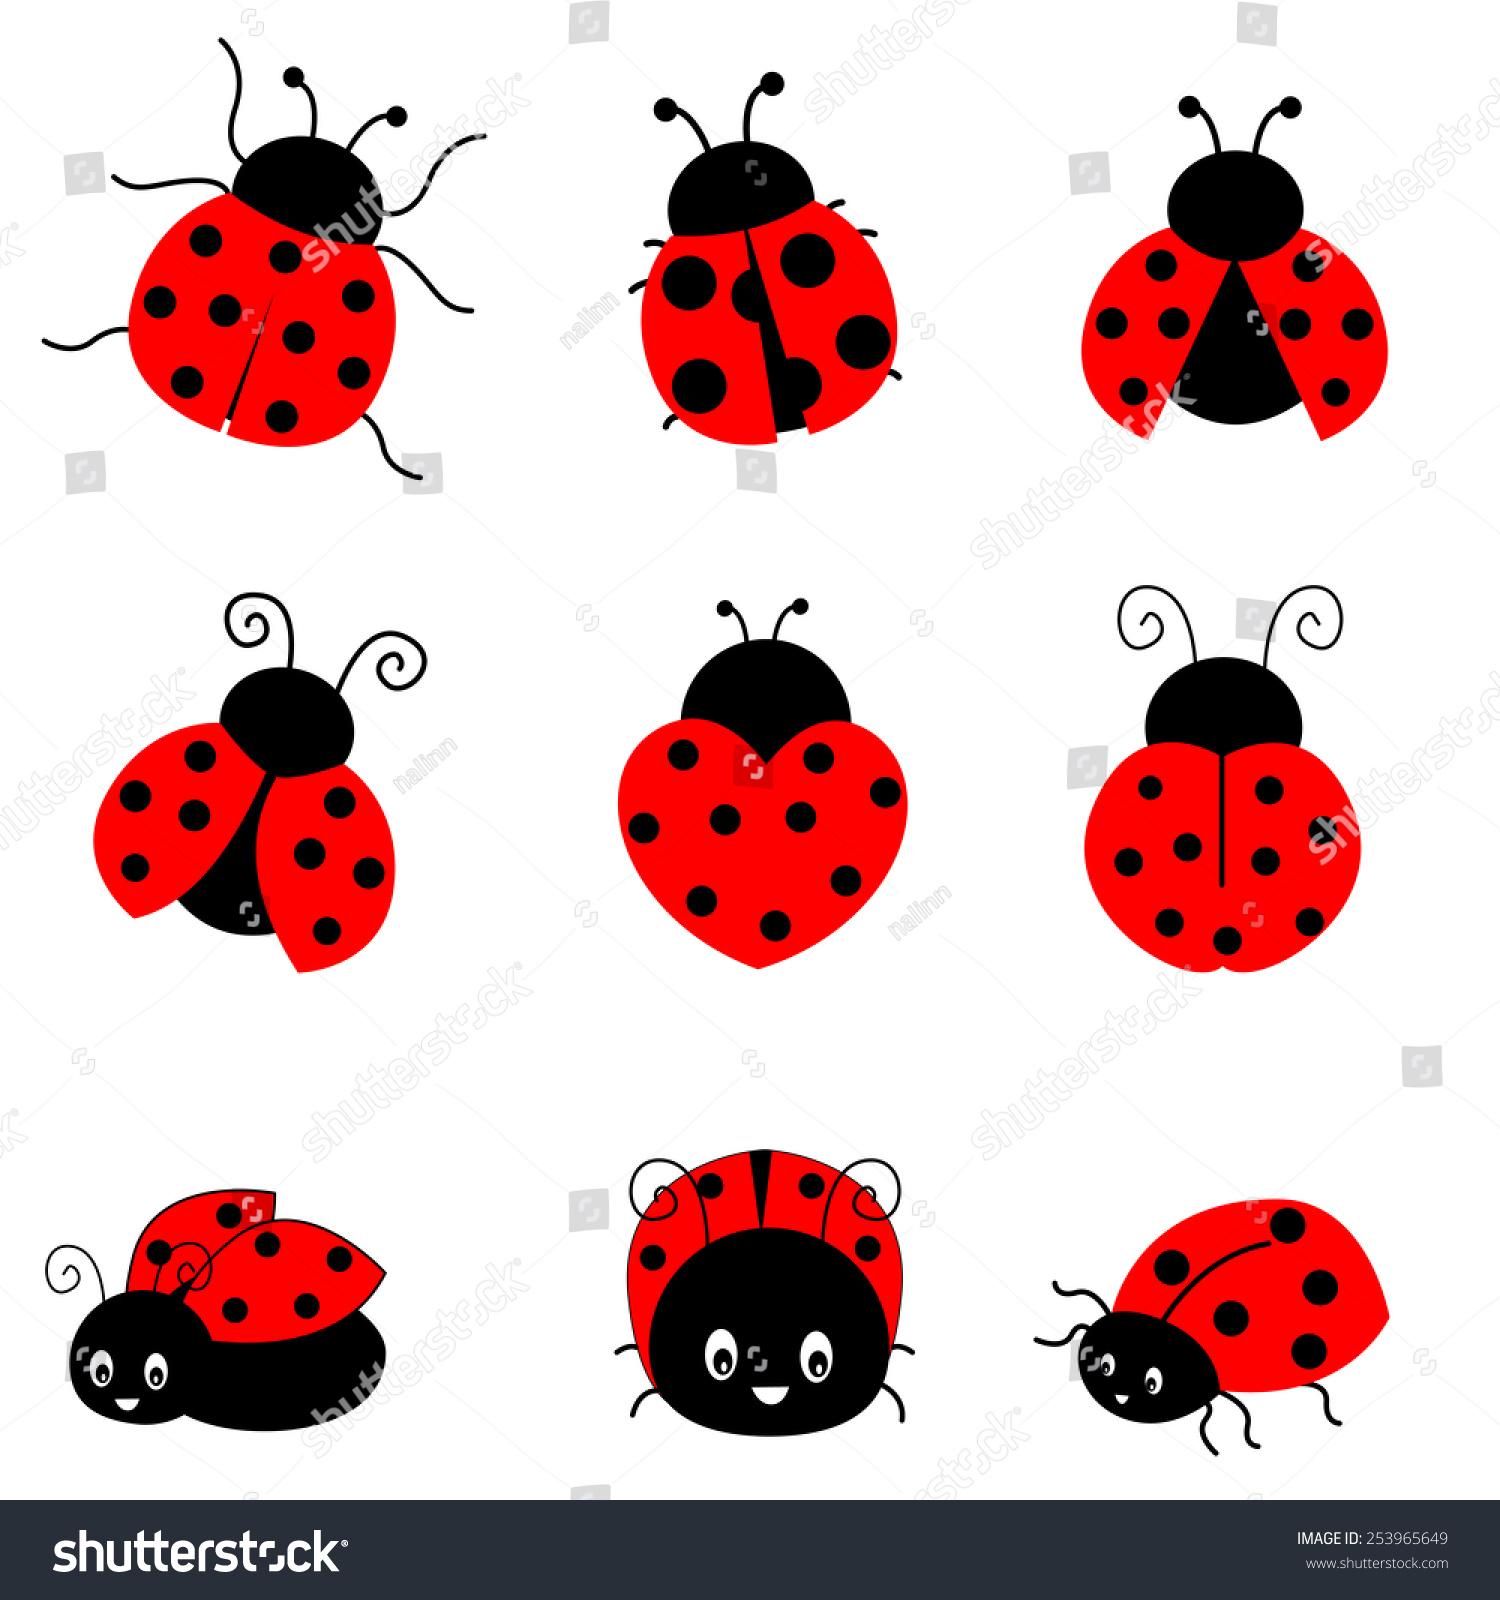 cute ladybug clipart black and white - photo #23